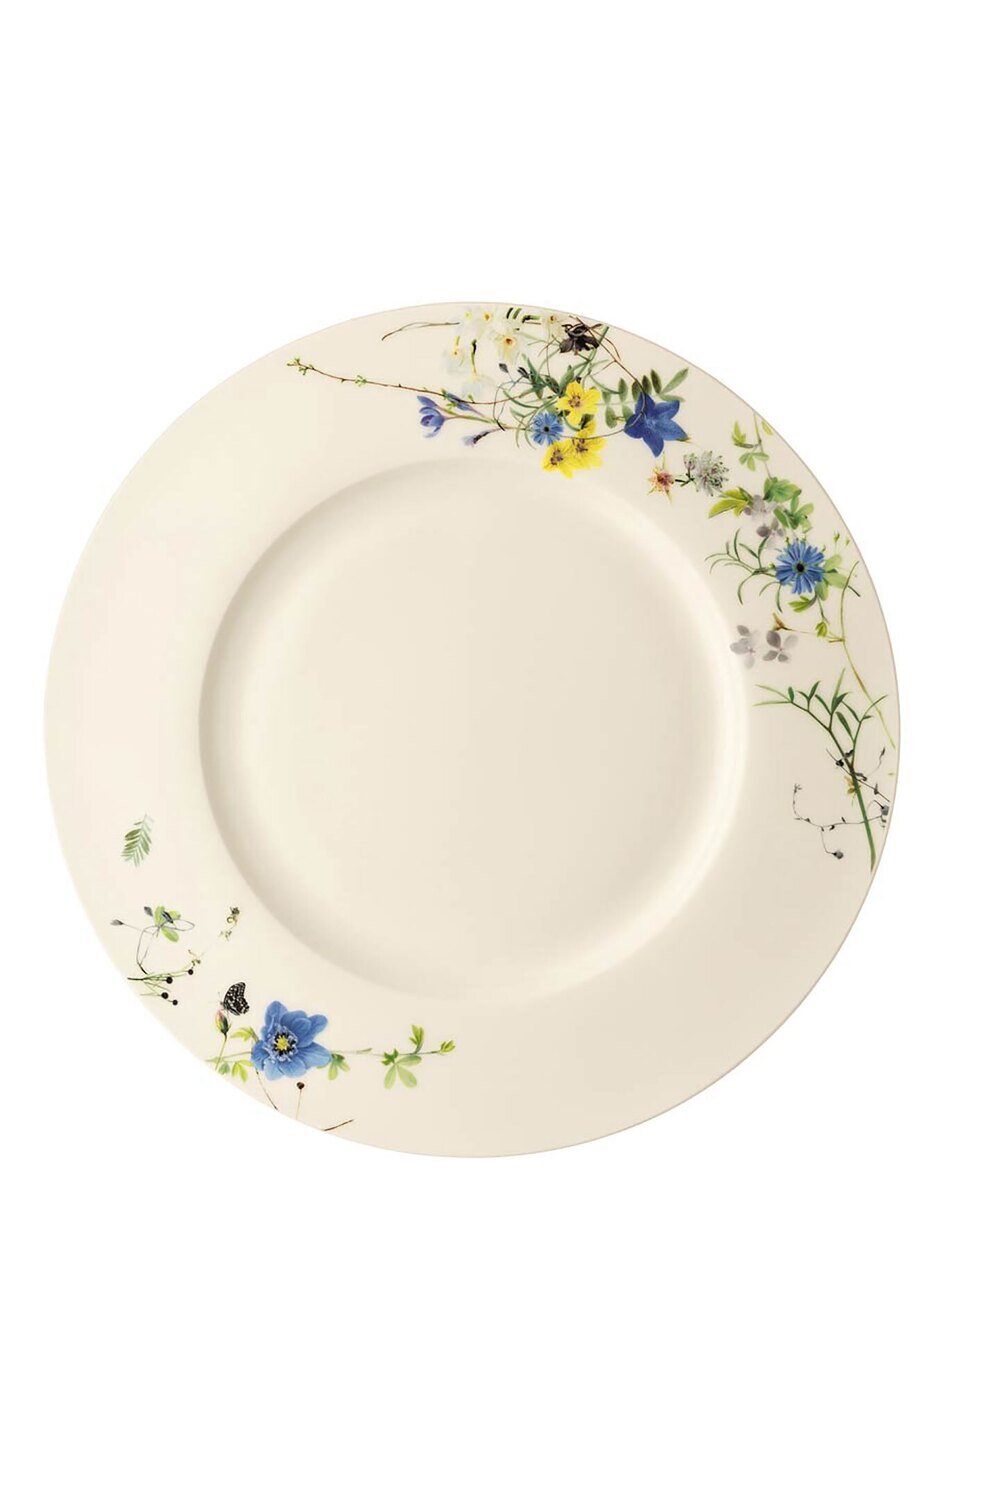 Rosenthal Brillance Fleurs des Alpes Dinner Plate Rim 11 Inch